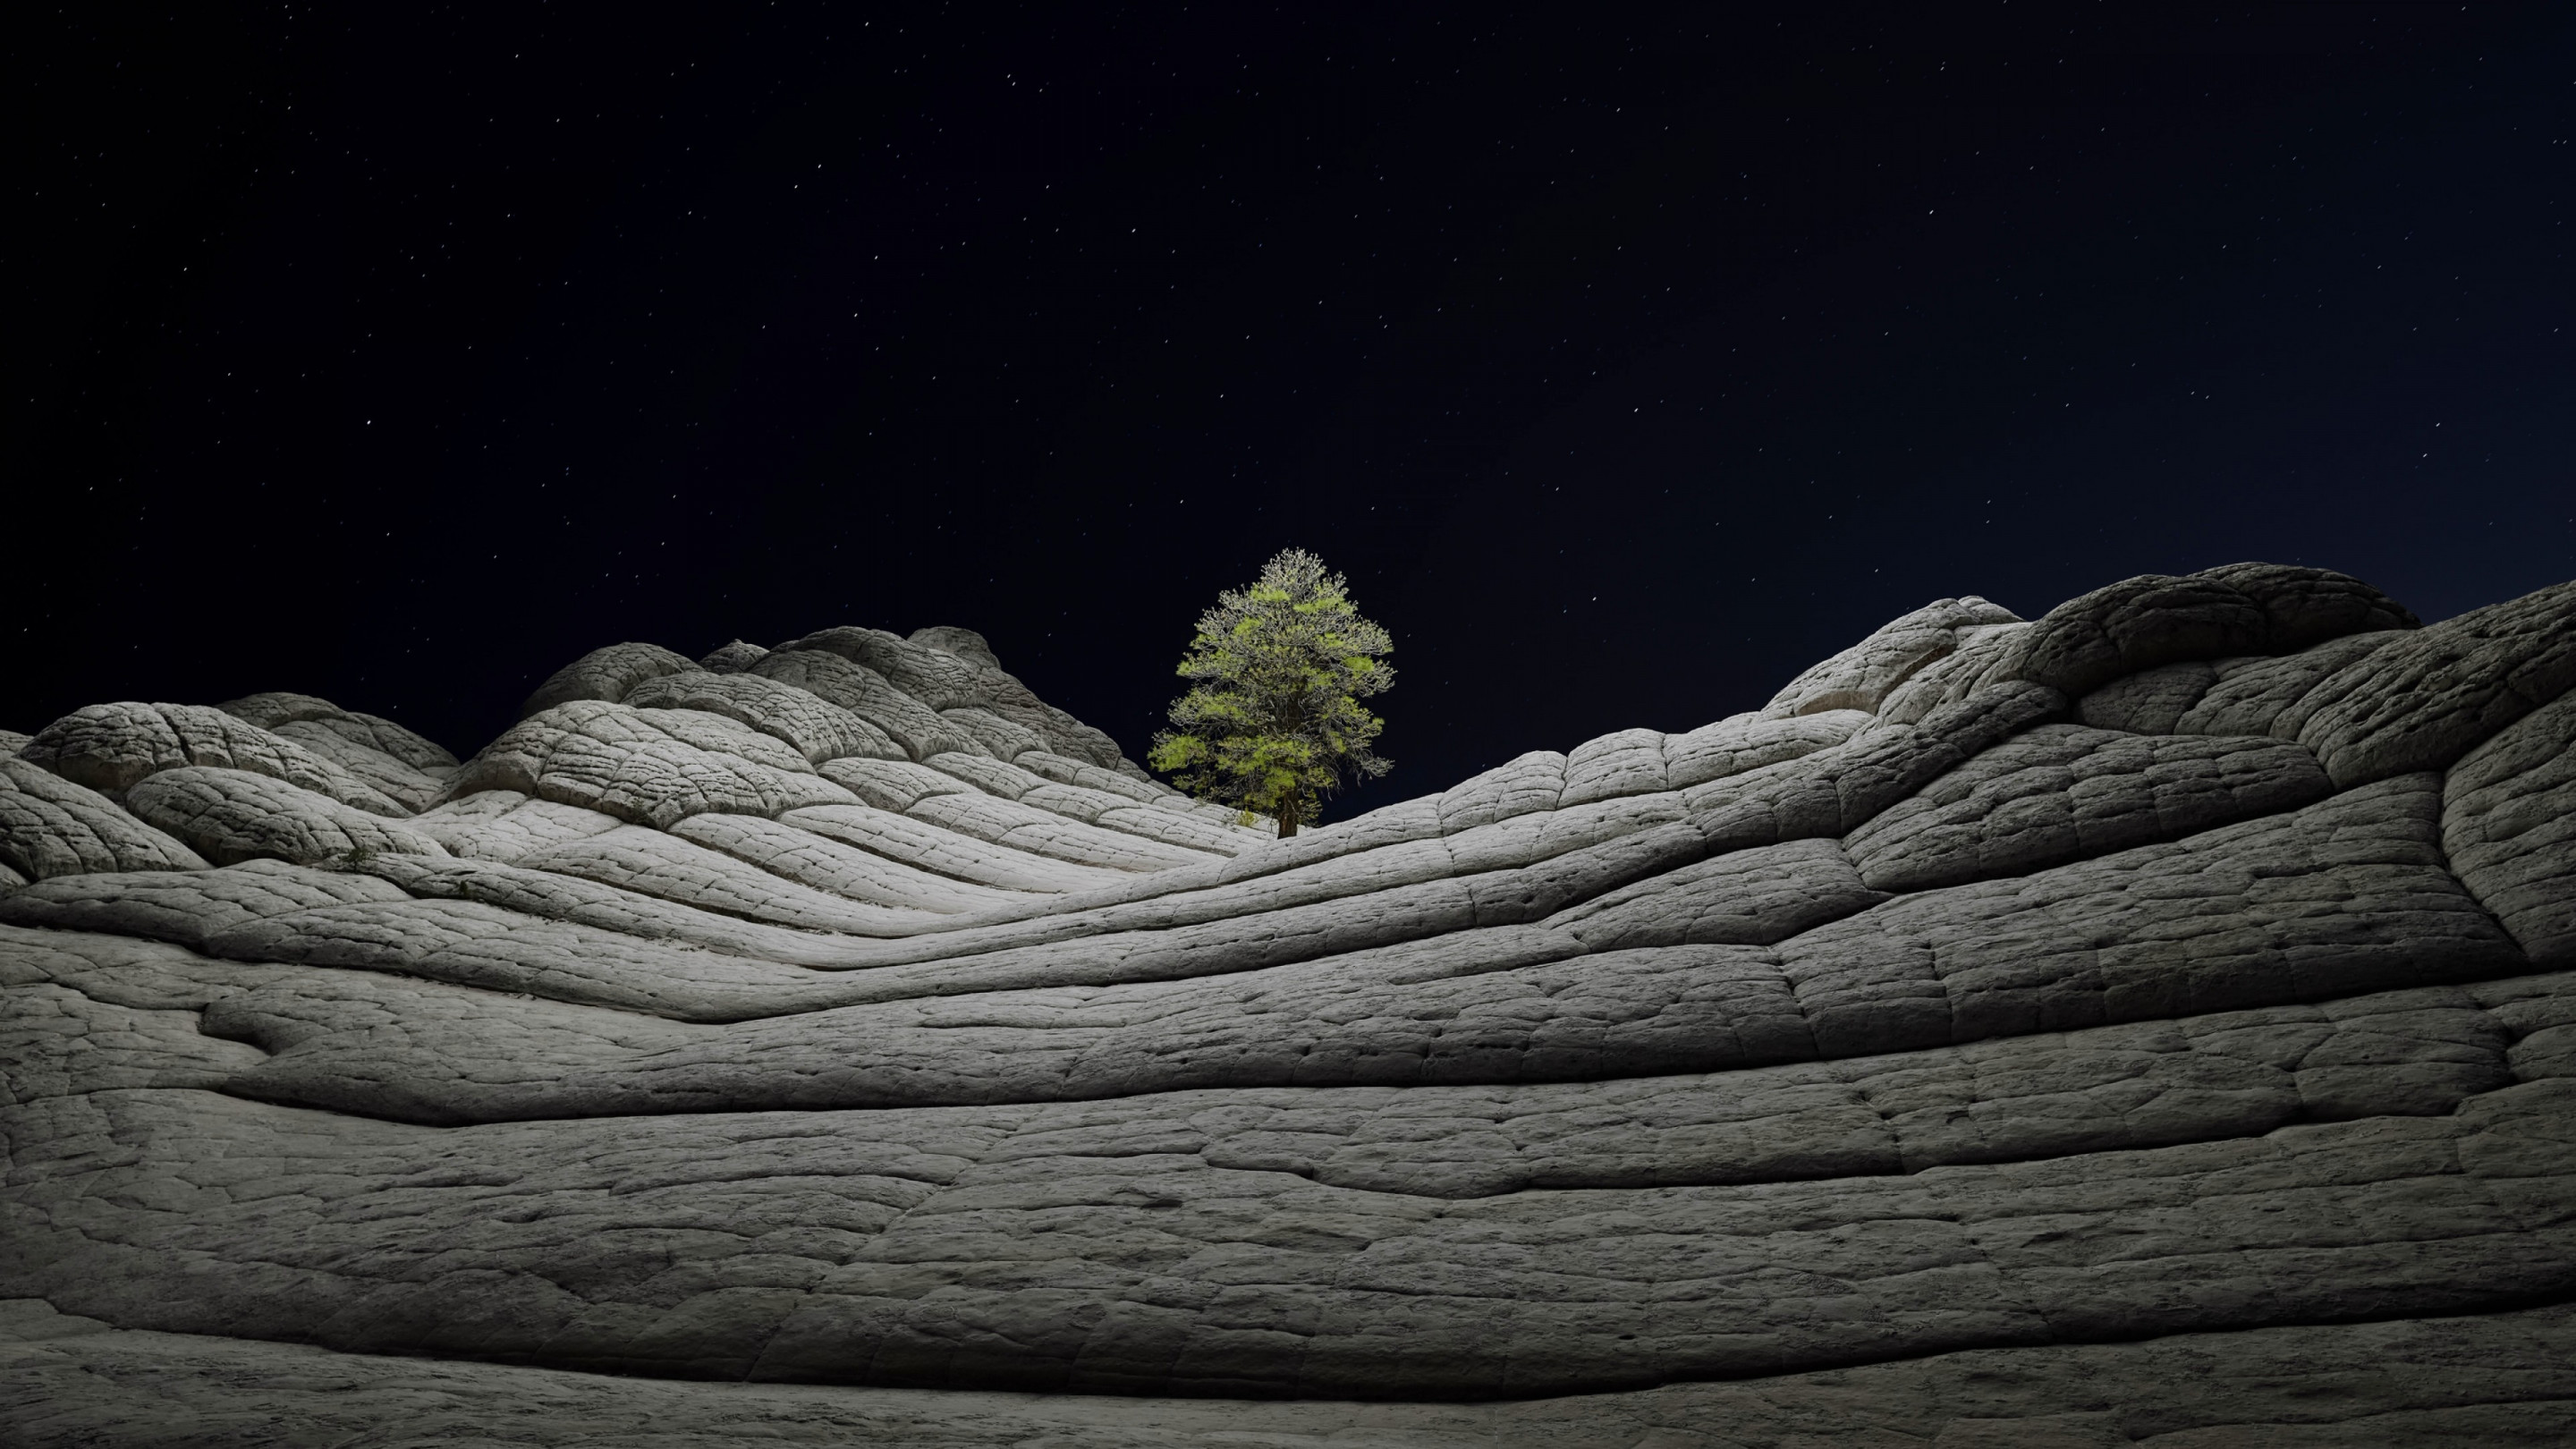 Desert tree in the cold night wallpaper 2880x1620